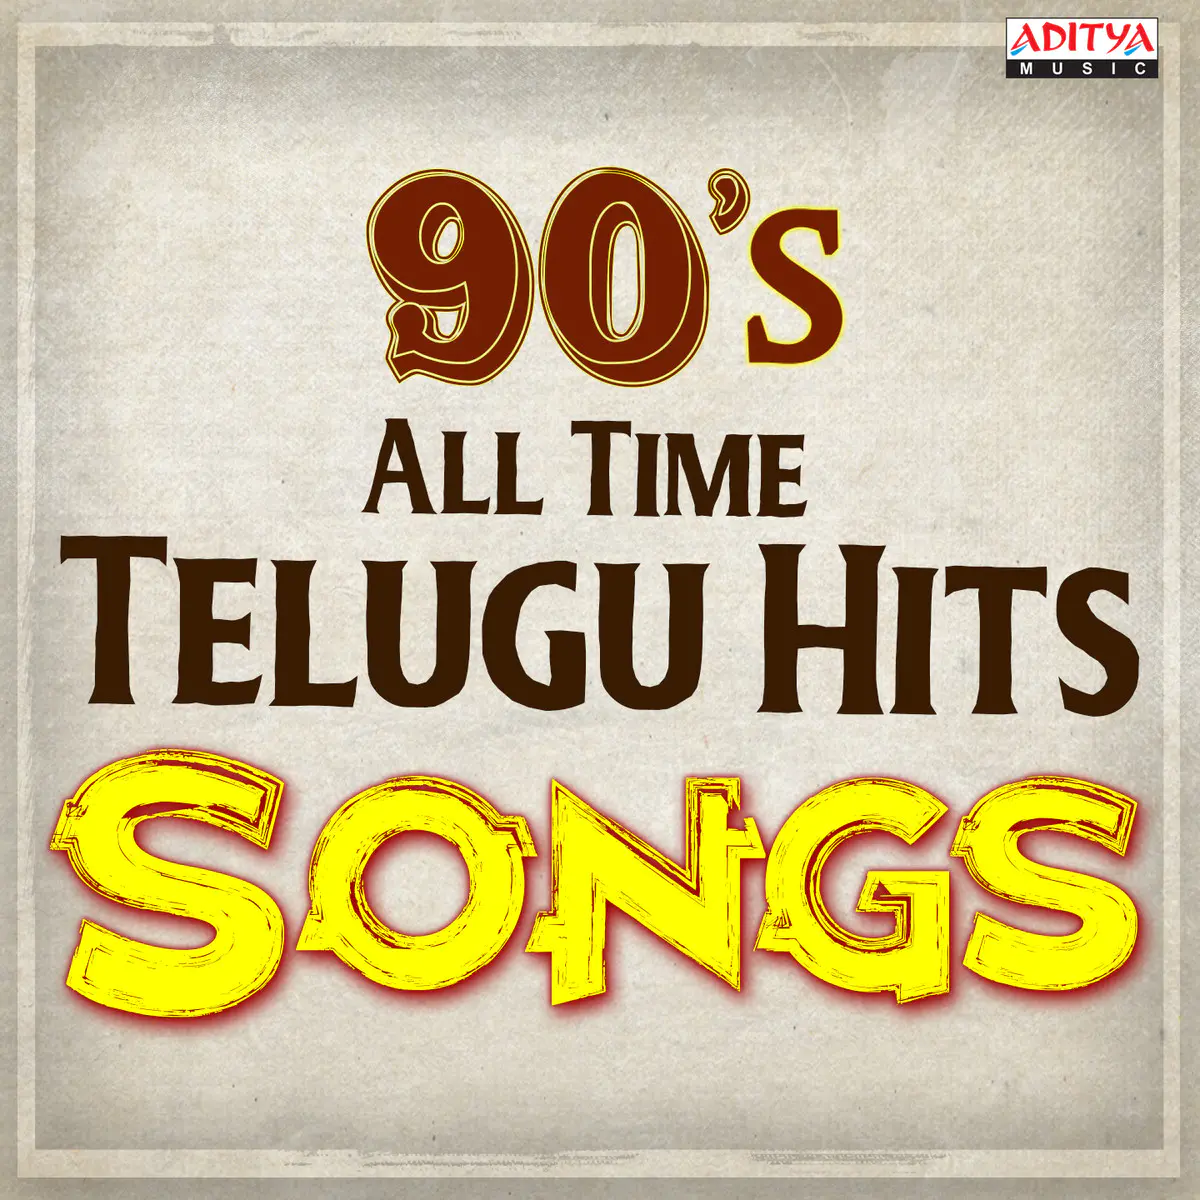 Of 90s file download free zip hindi songs 100 Lata Mangeshkar